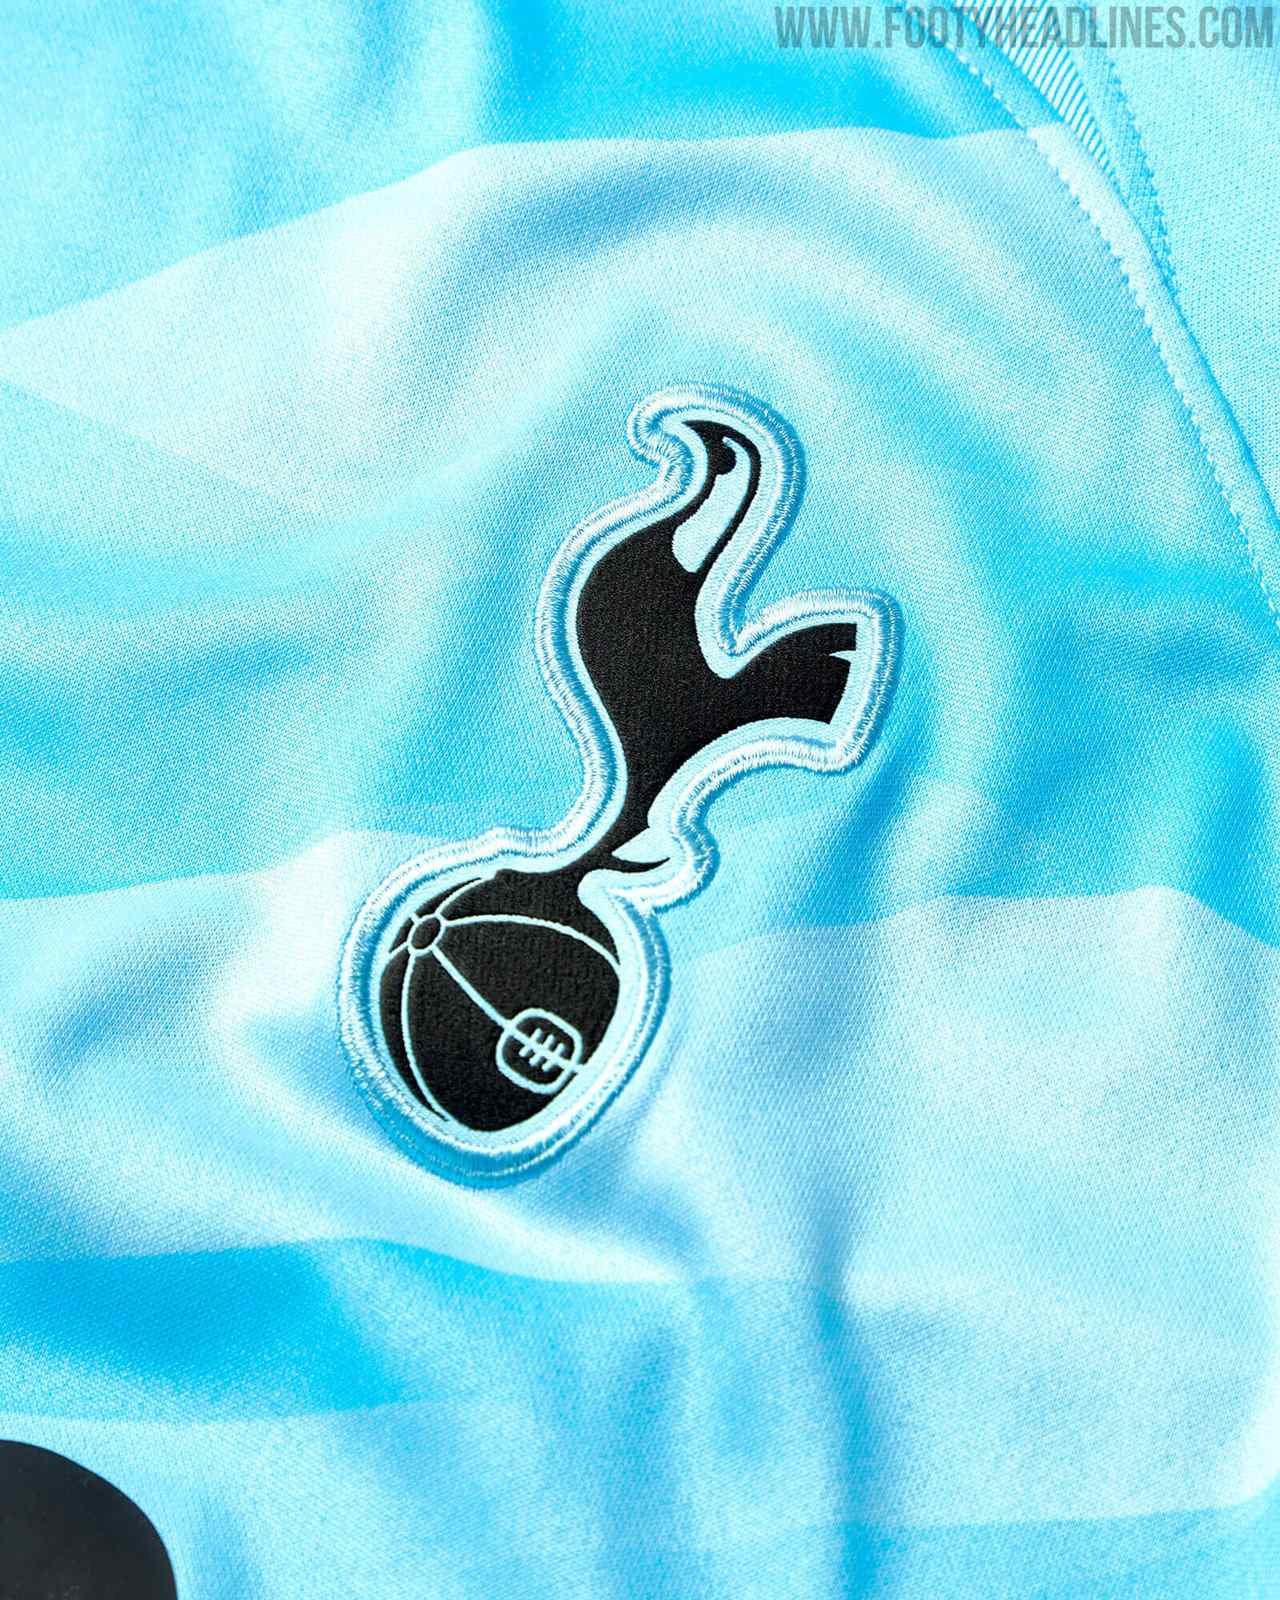 Tottenham 22-23 Goalkeeper Kit Released - Footy Headlines